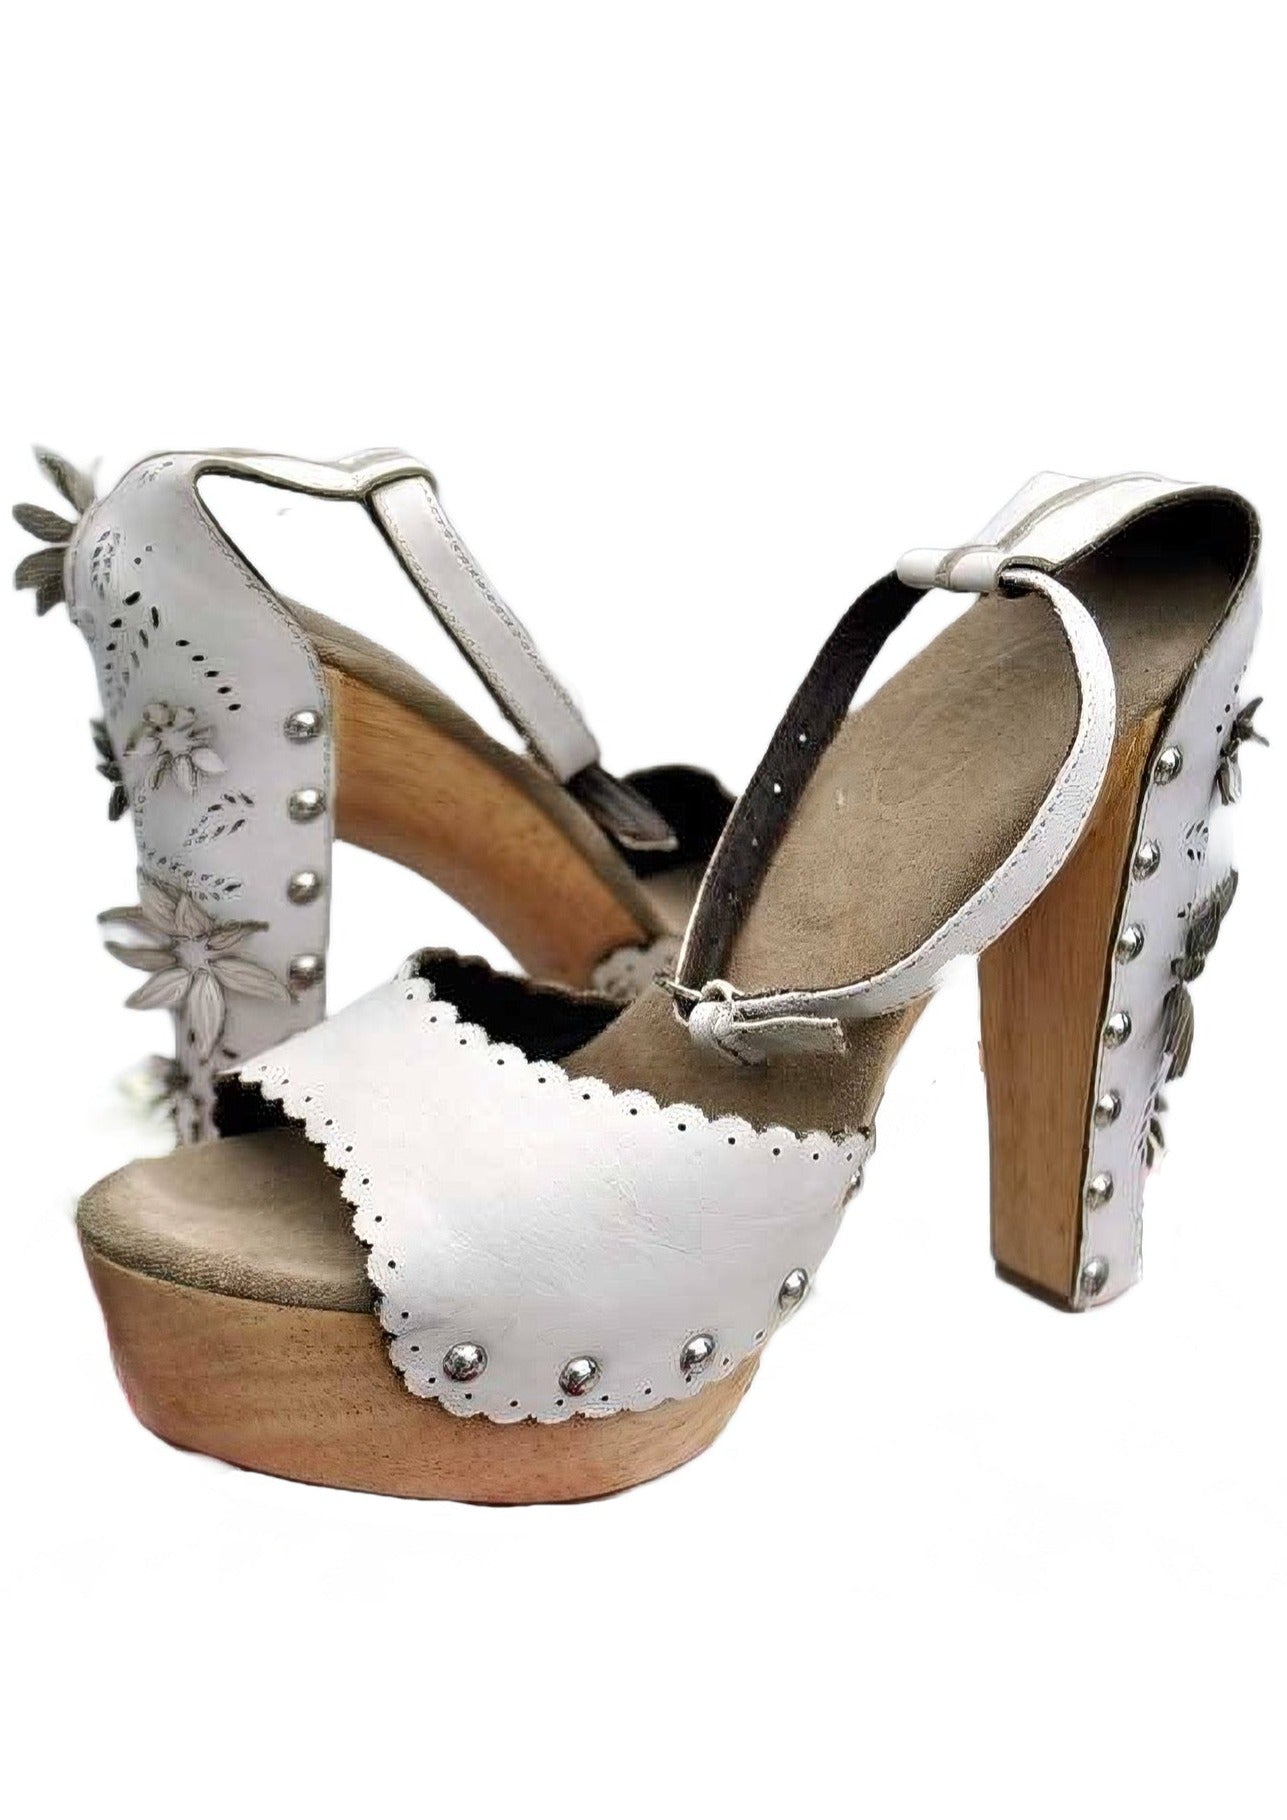 white leather rockabilly, 40s style high heel platform clog sandals